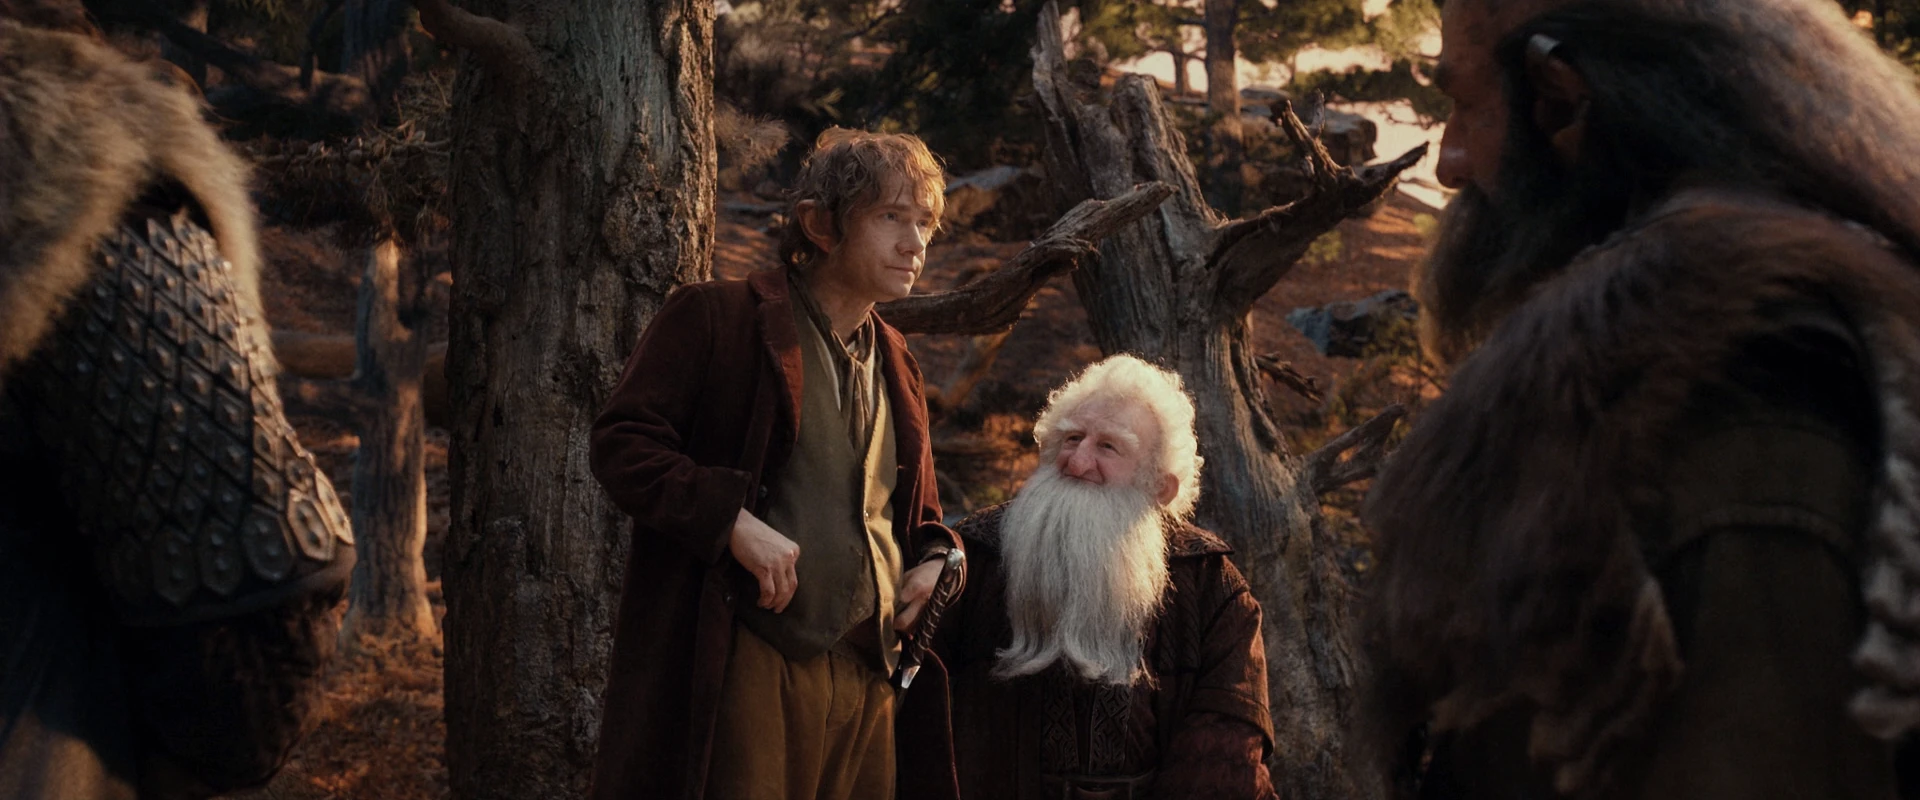 the hobbit unexpected journey mp4 download